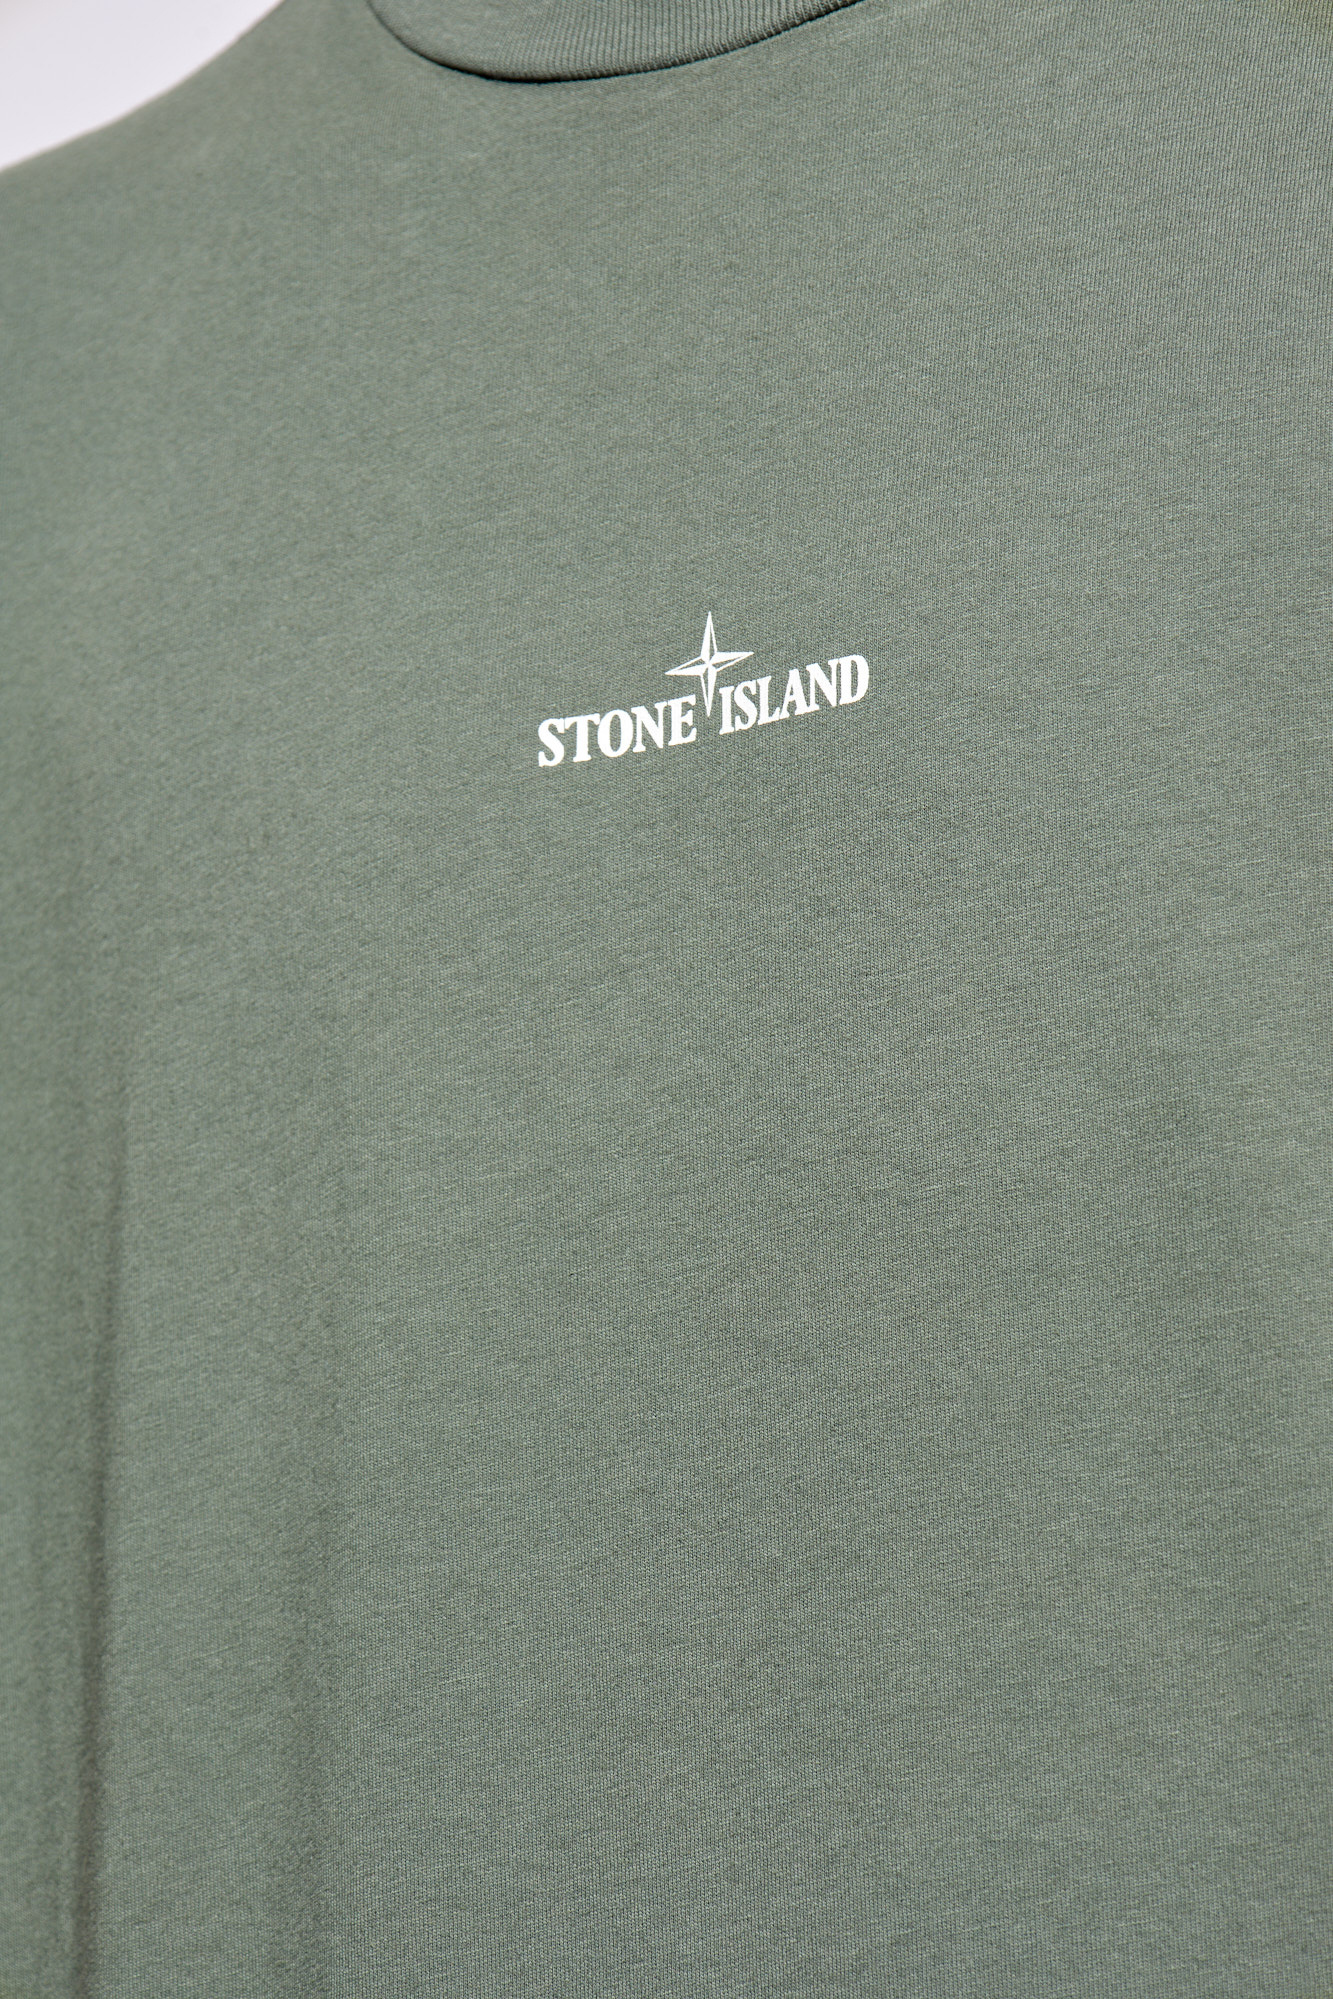 Stone Island Mostly Heard Rarely Seen 8-Bit graphic print hoodie